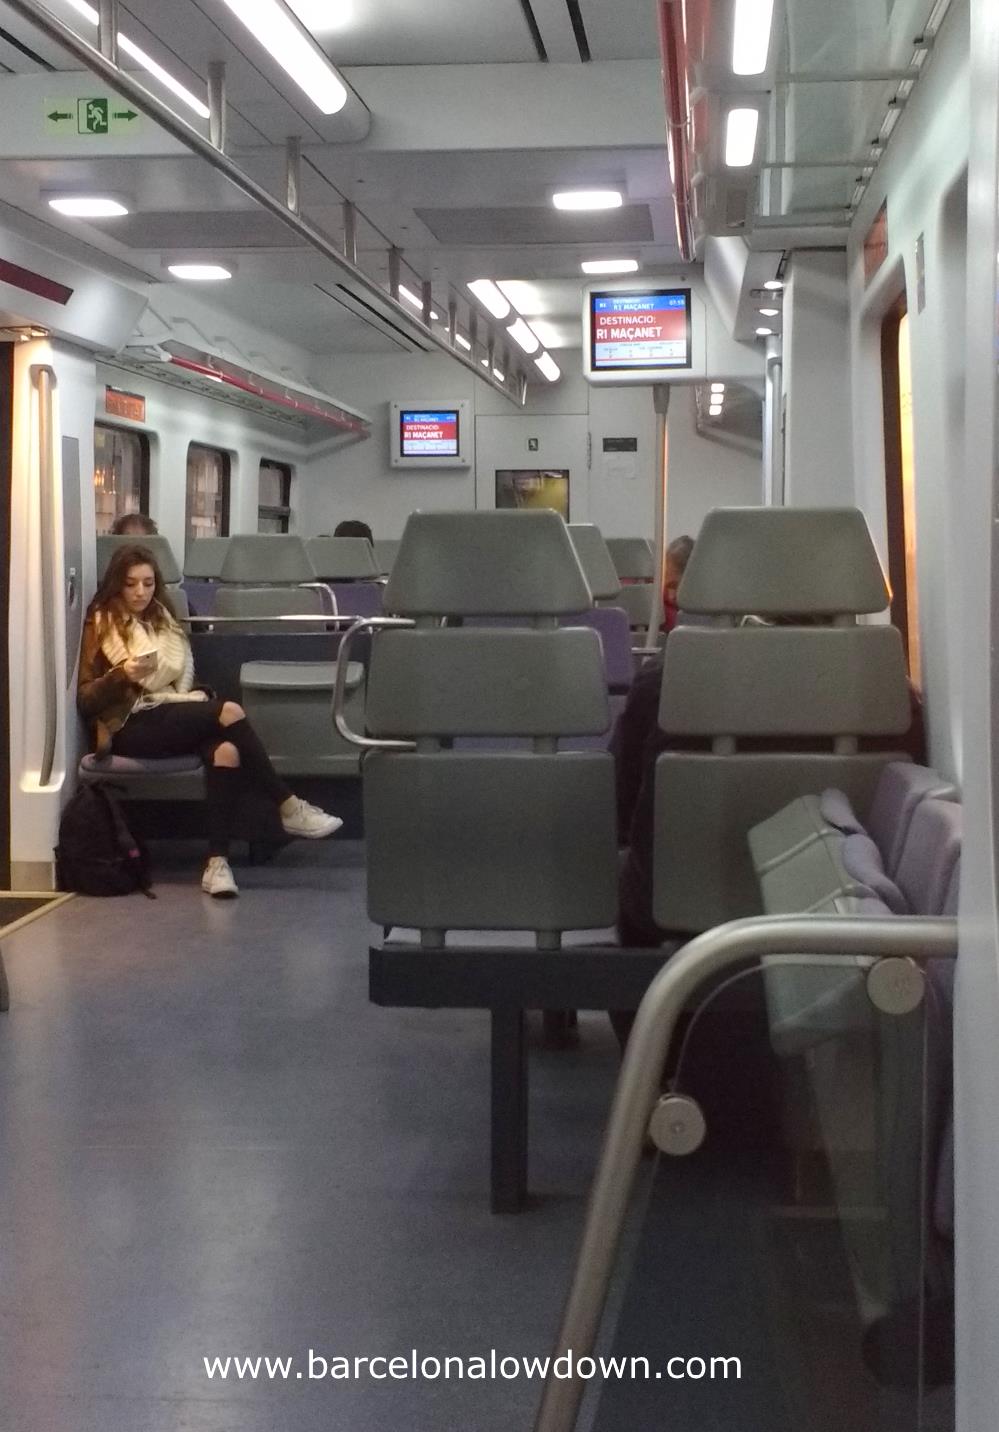 photo taken inside a Spanish train